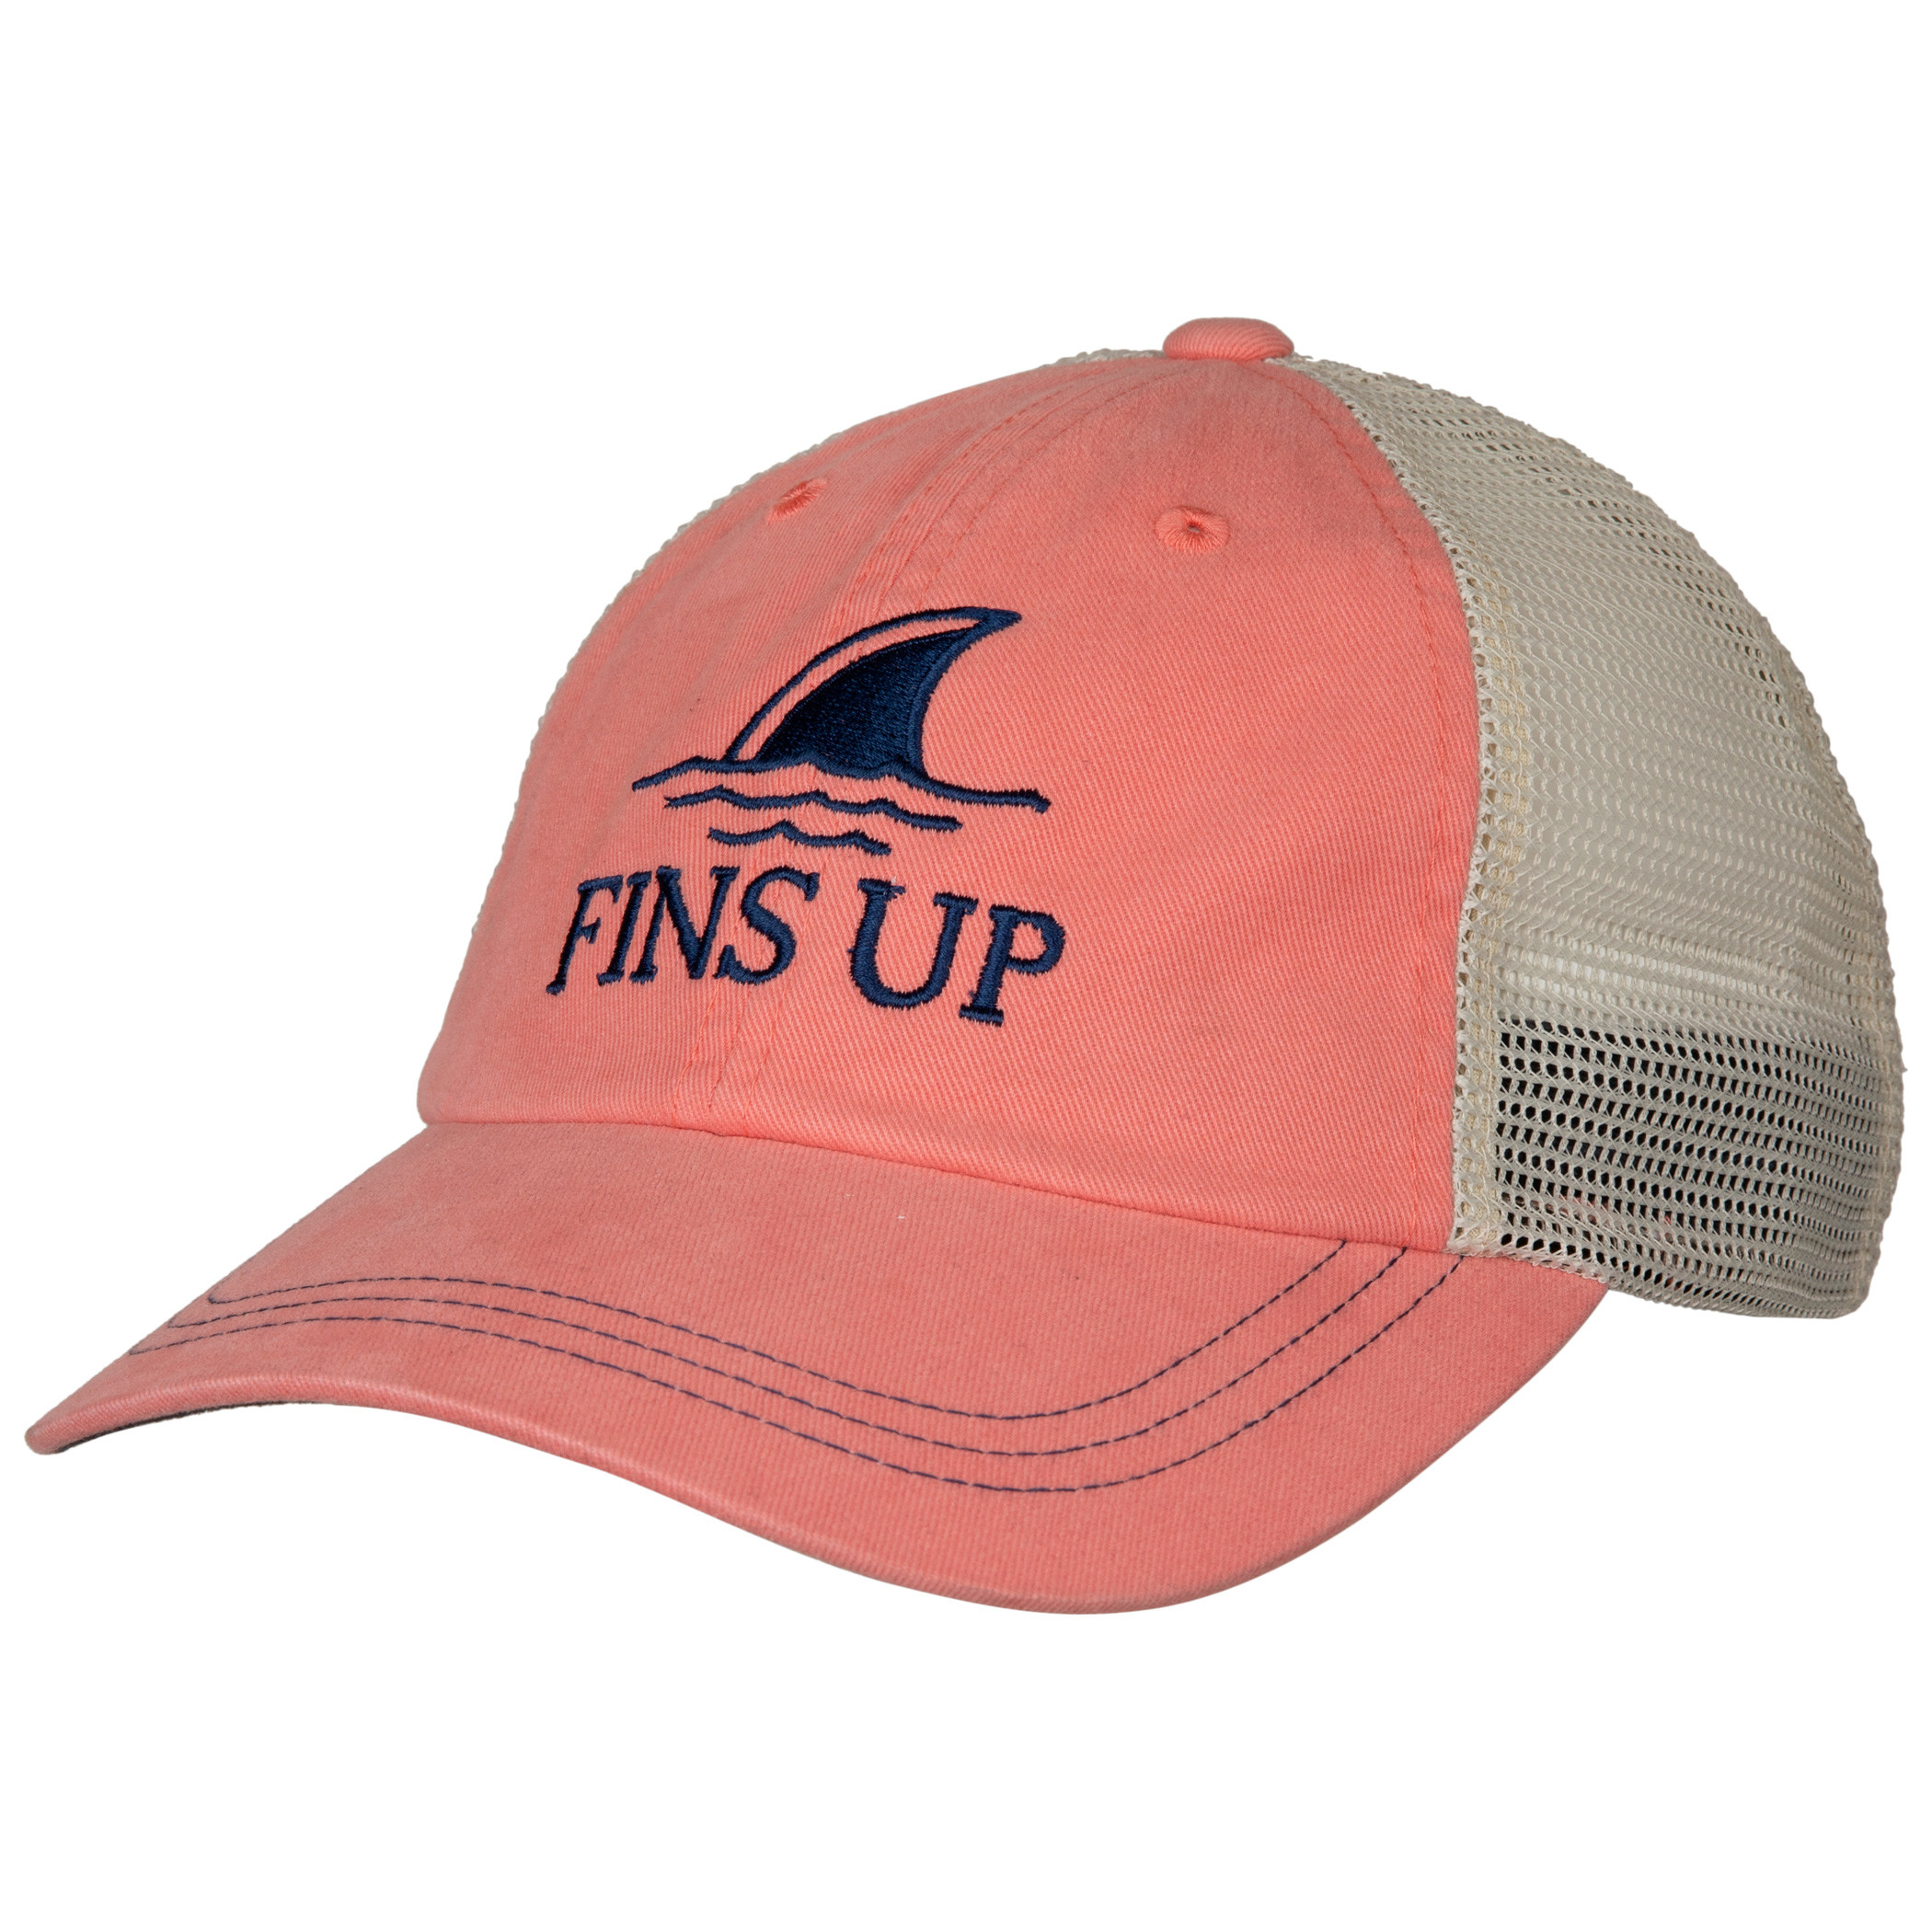 Landshark Fins Up Salmon Colorway Adjustable Hat